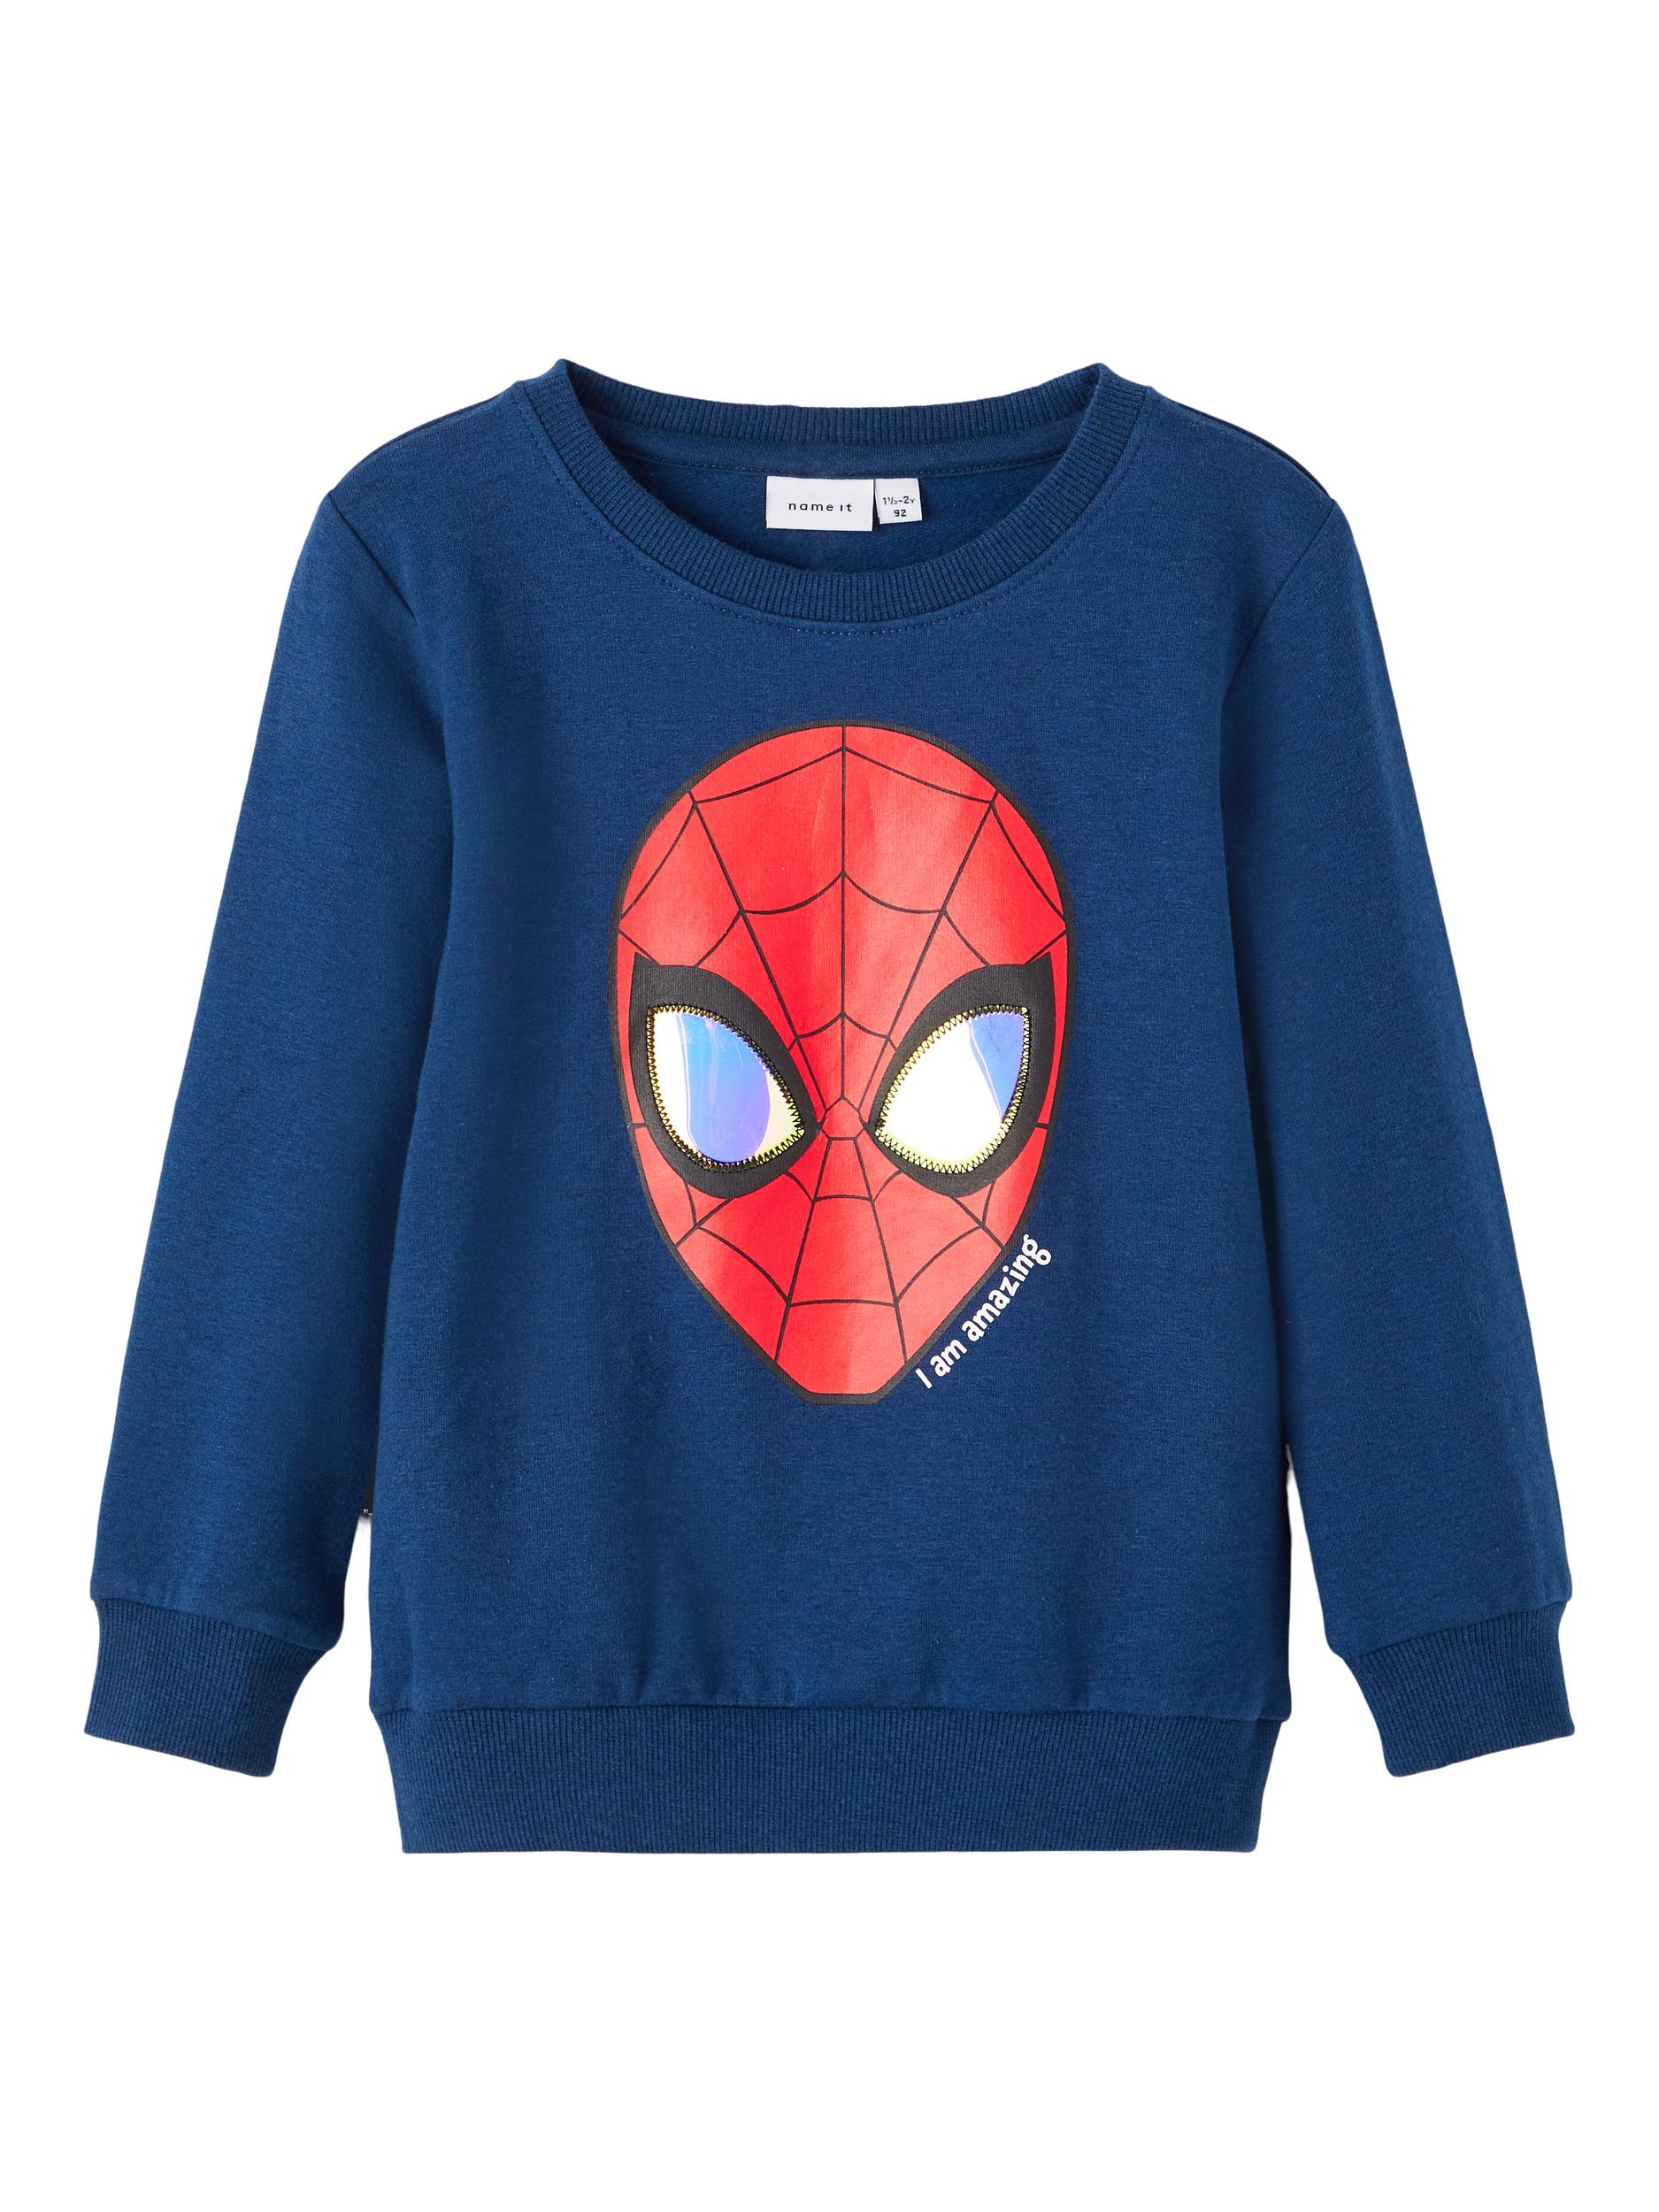 Name It Spiderman Sweatshirt, Titan, 116 cm